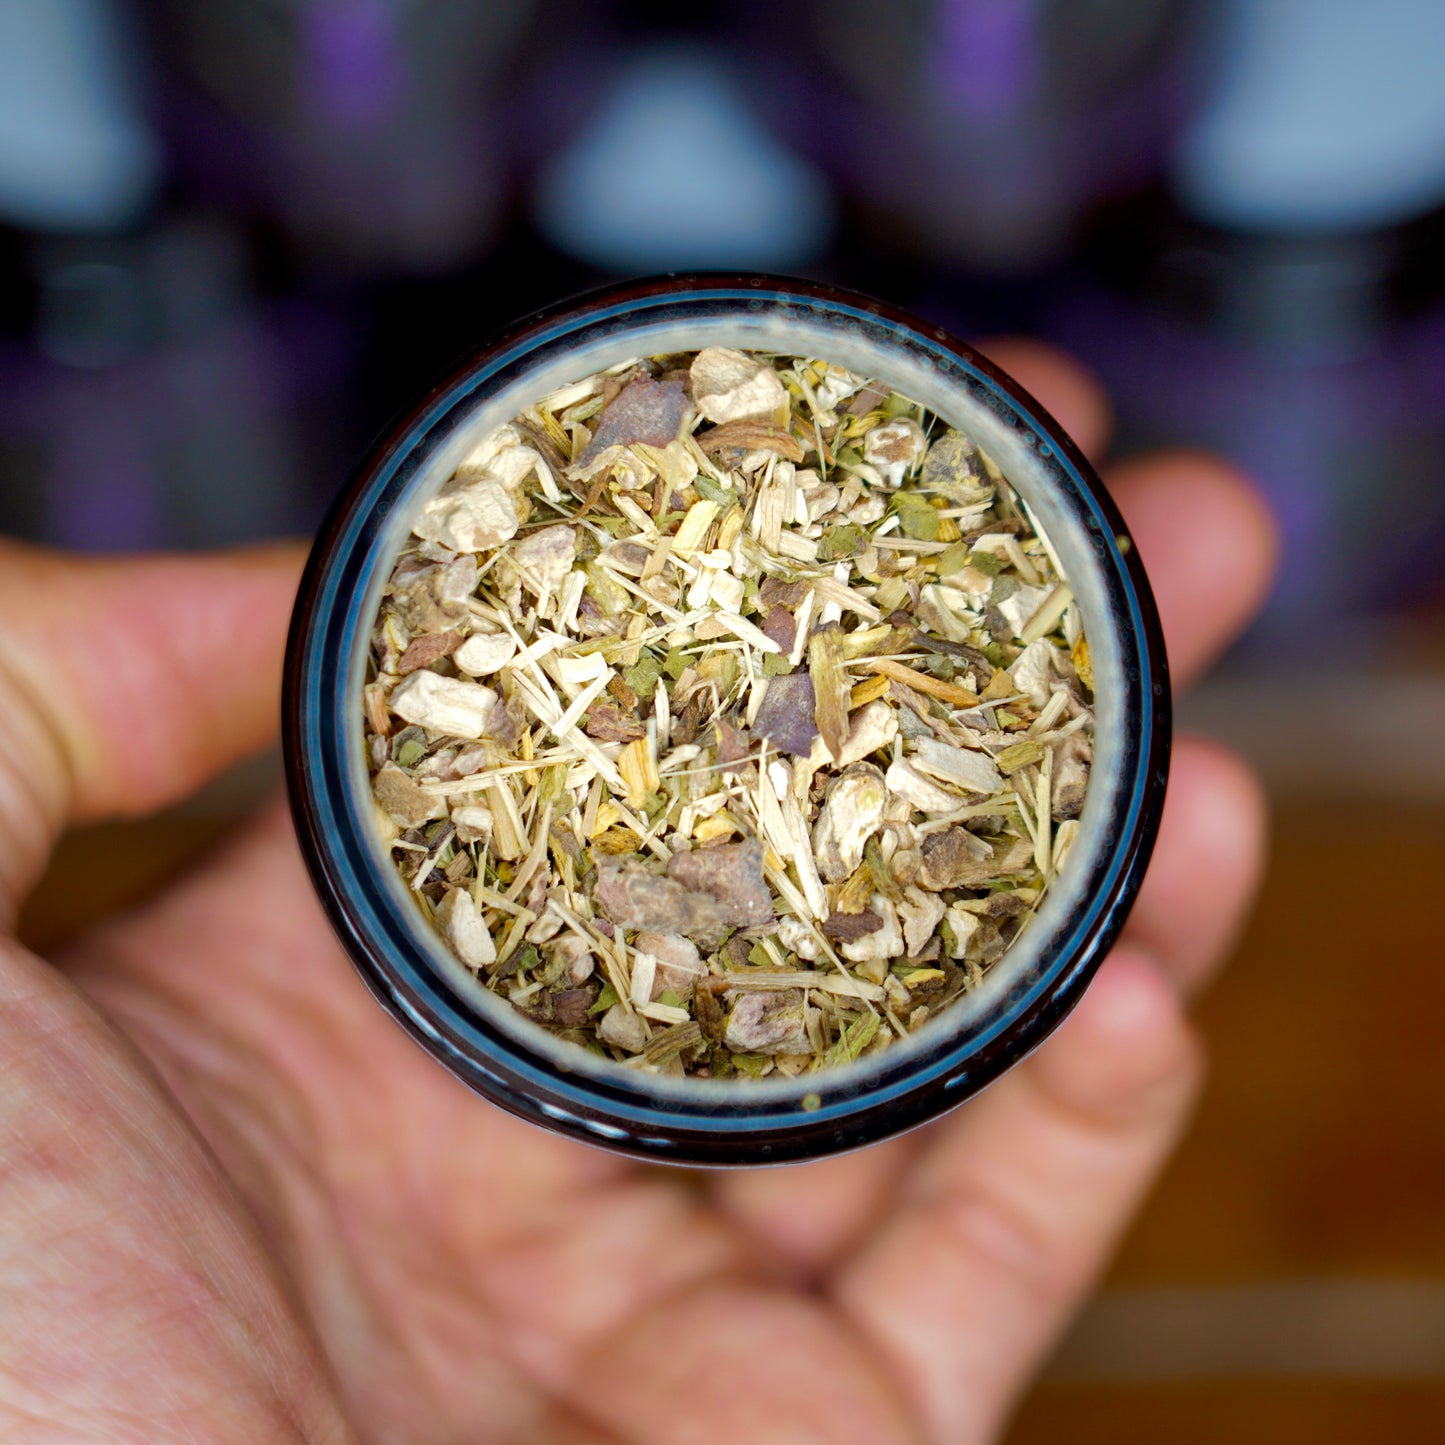 Adrenal Revive Herbal Tea Close Up Shot of Herbs in Jar Held in Hand